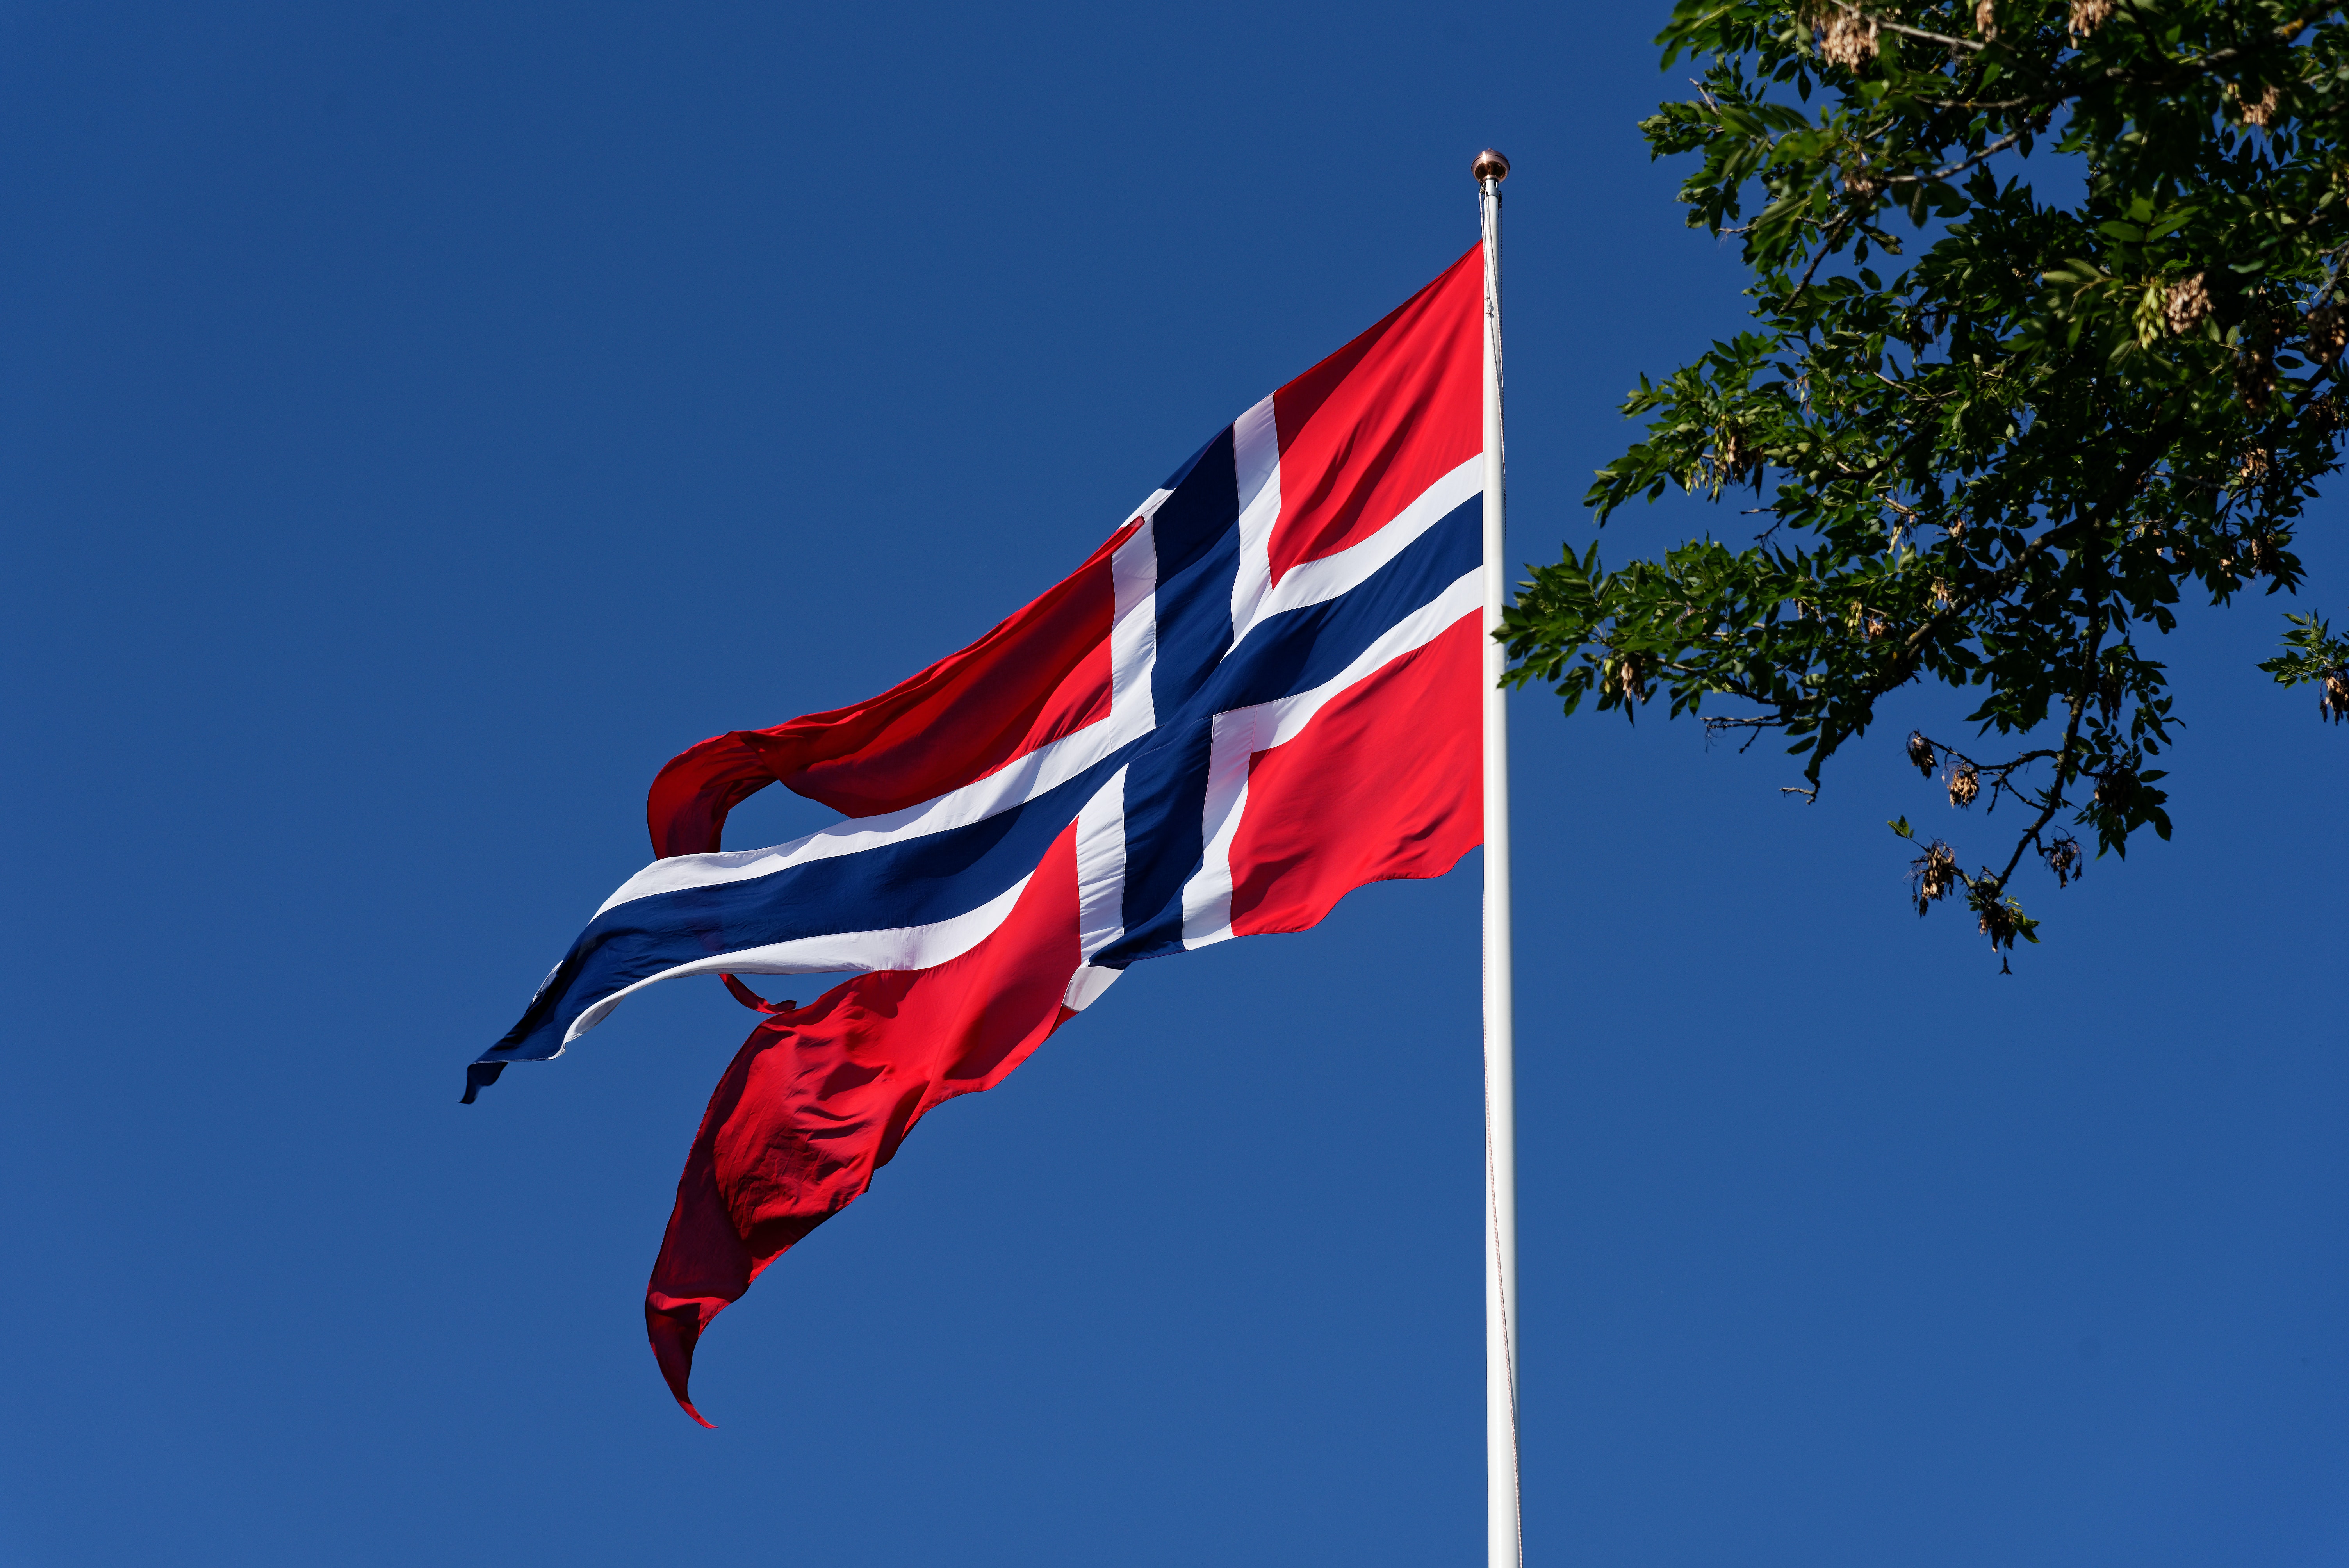 Norsk vidunder- avagy a Norvég csoda